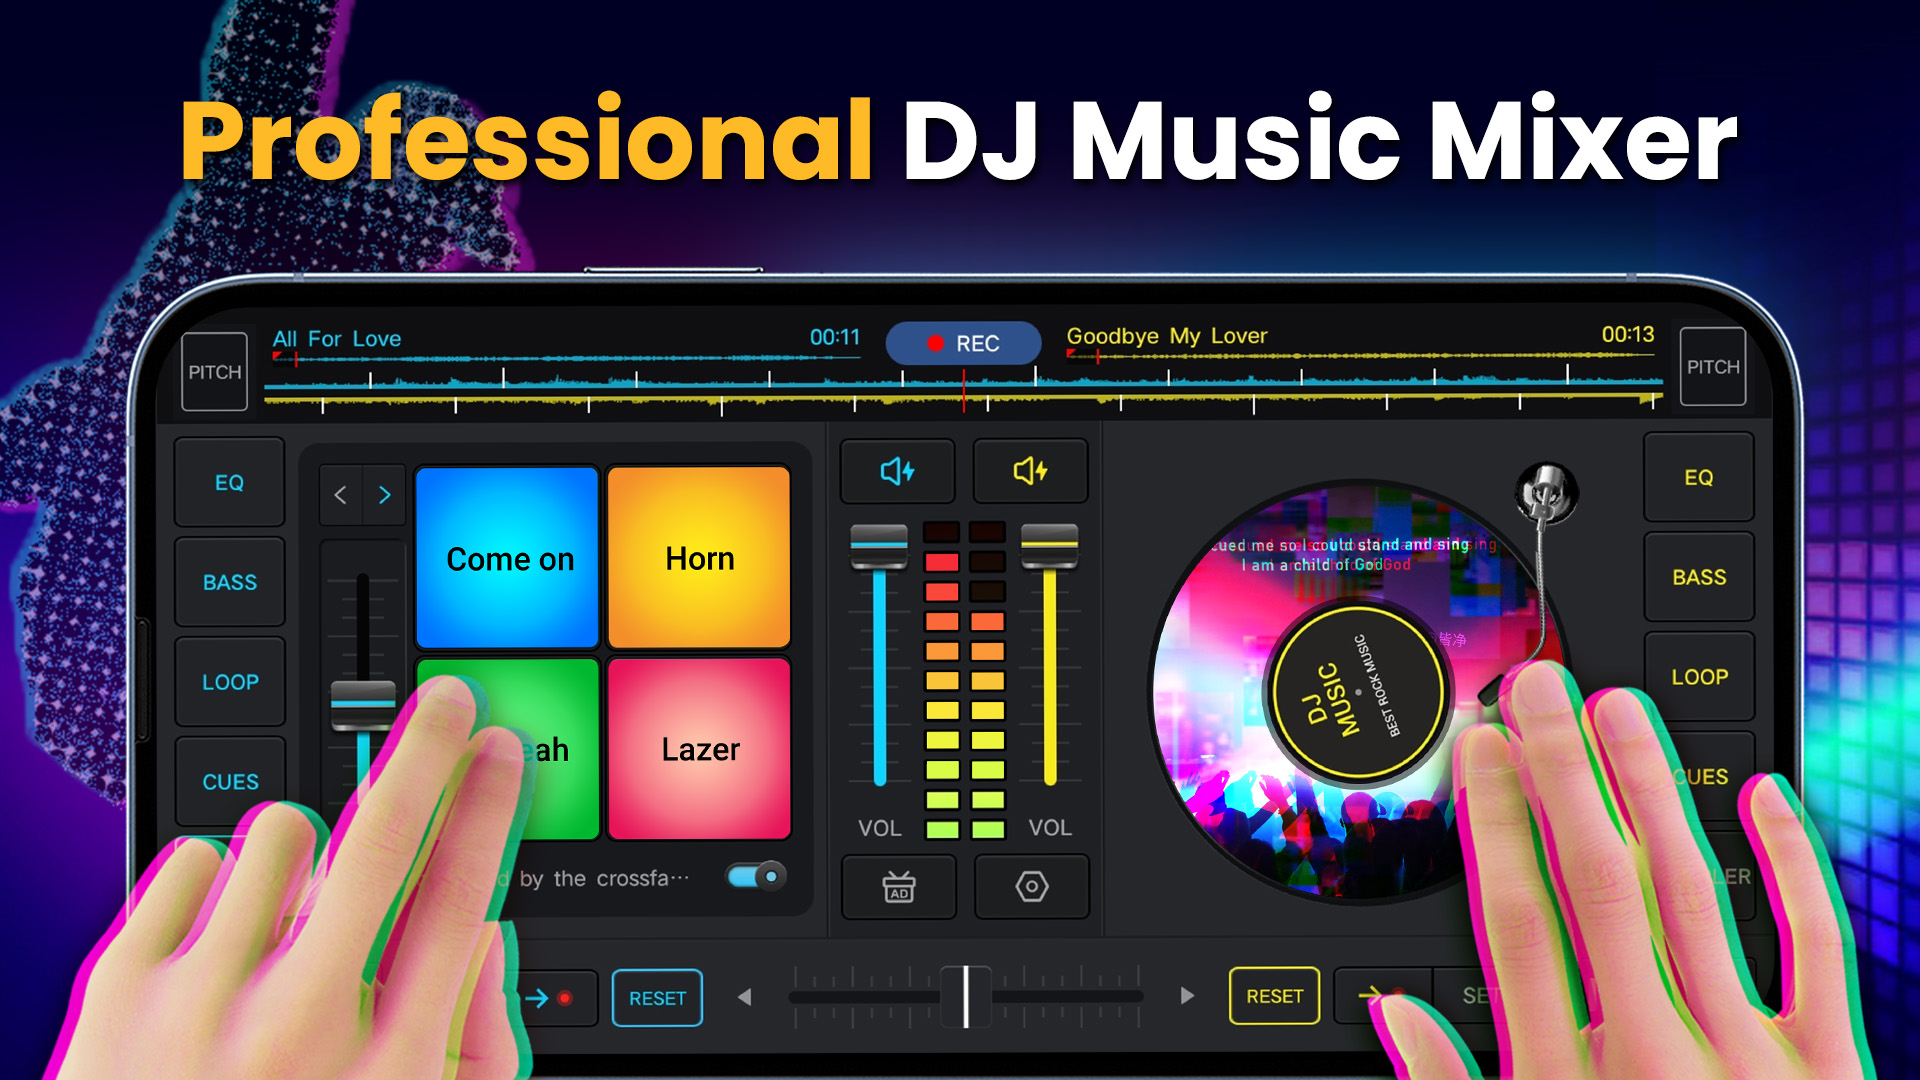 DJ Music Mixer screenshot 2023